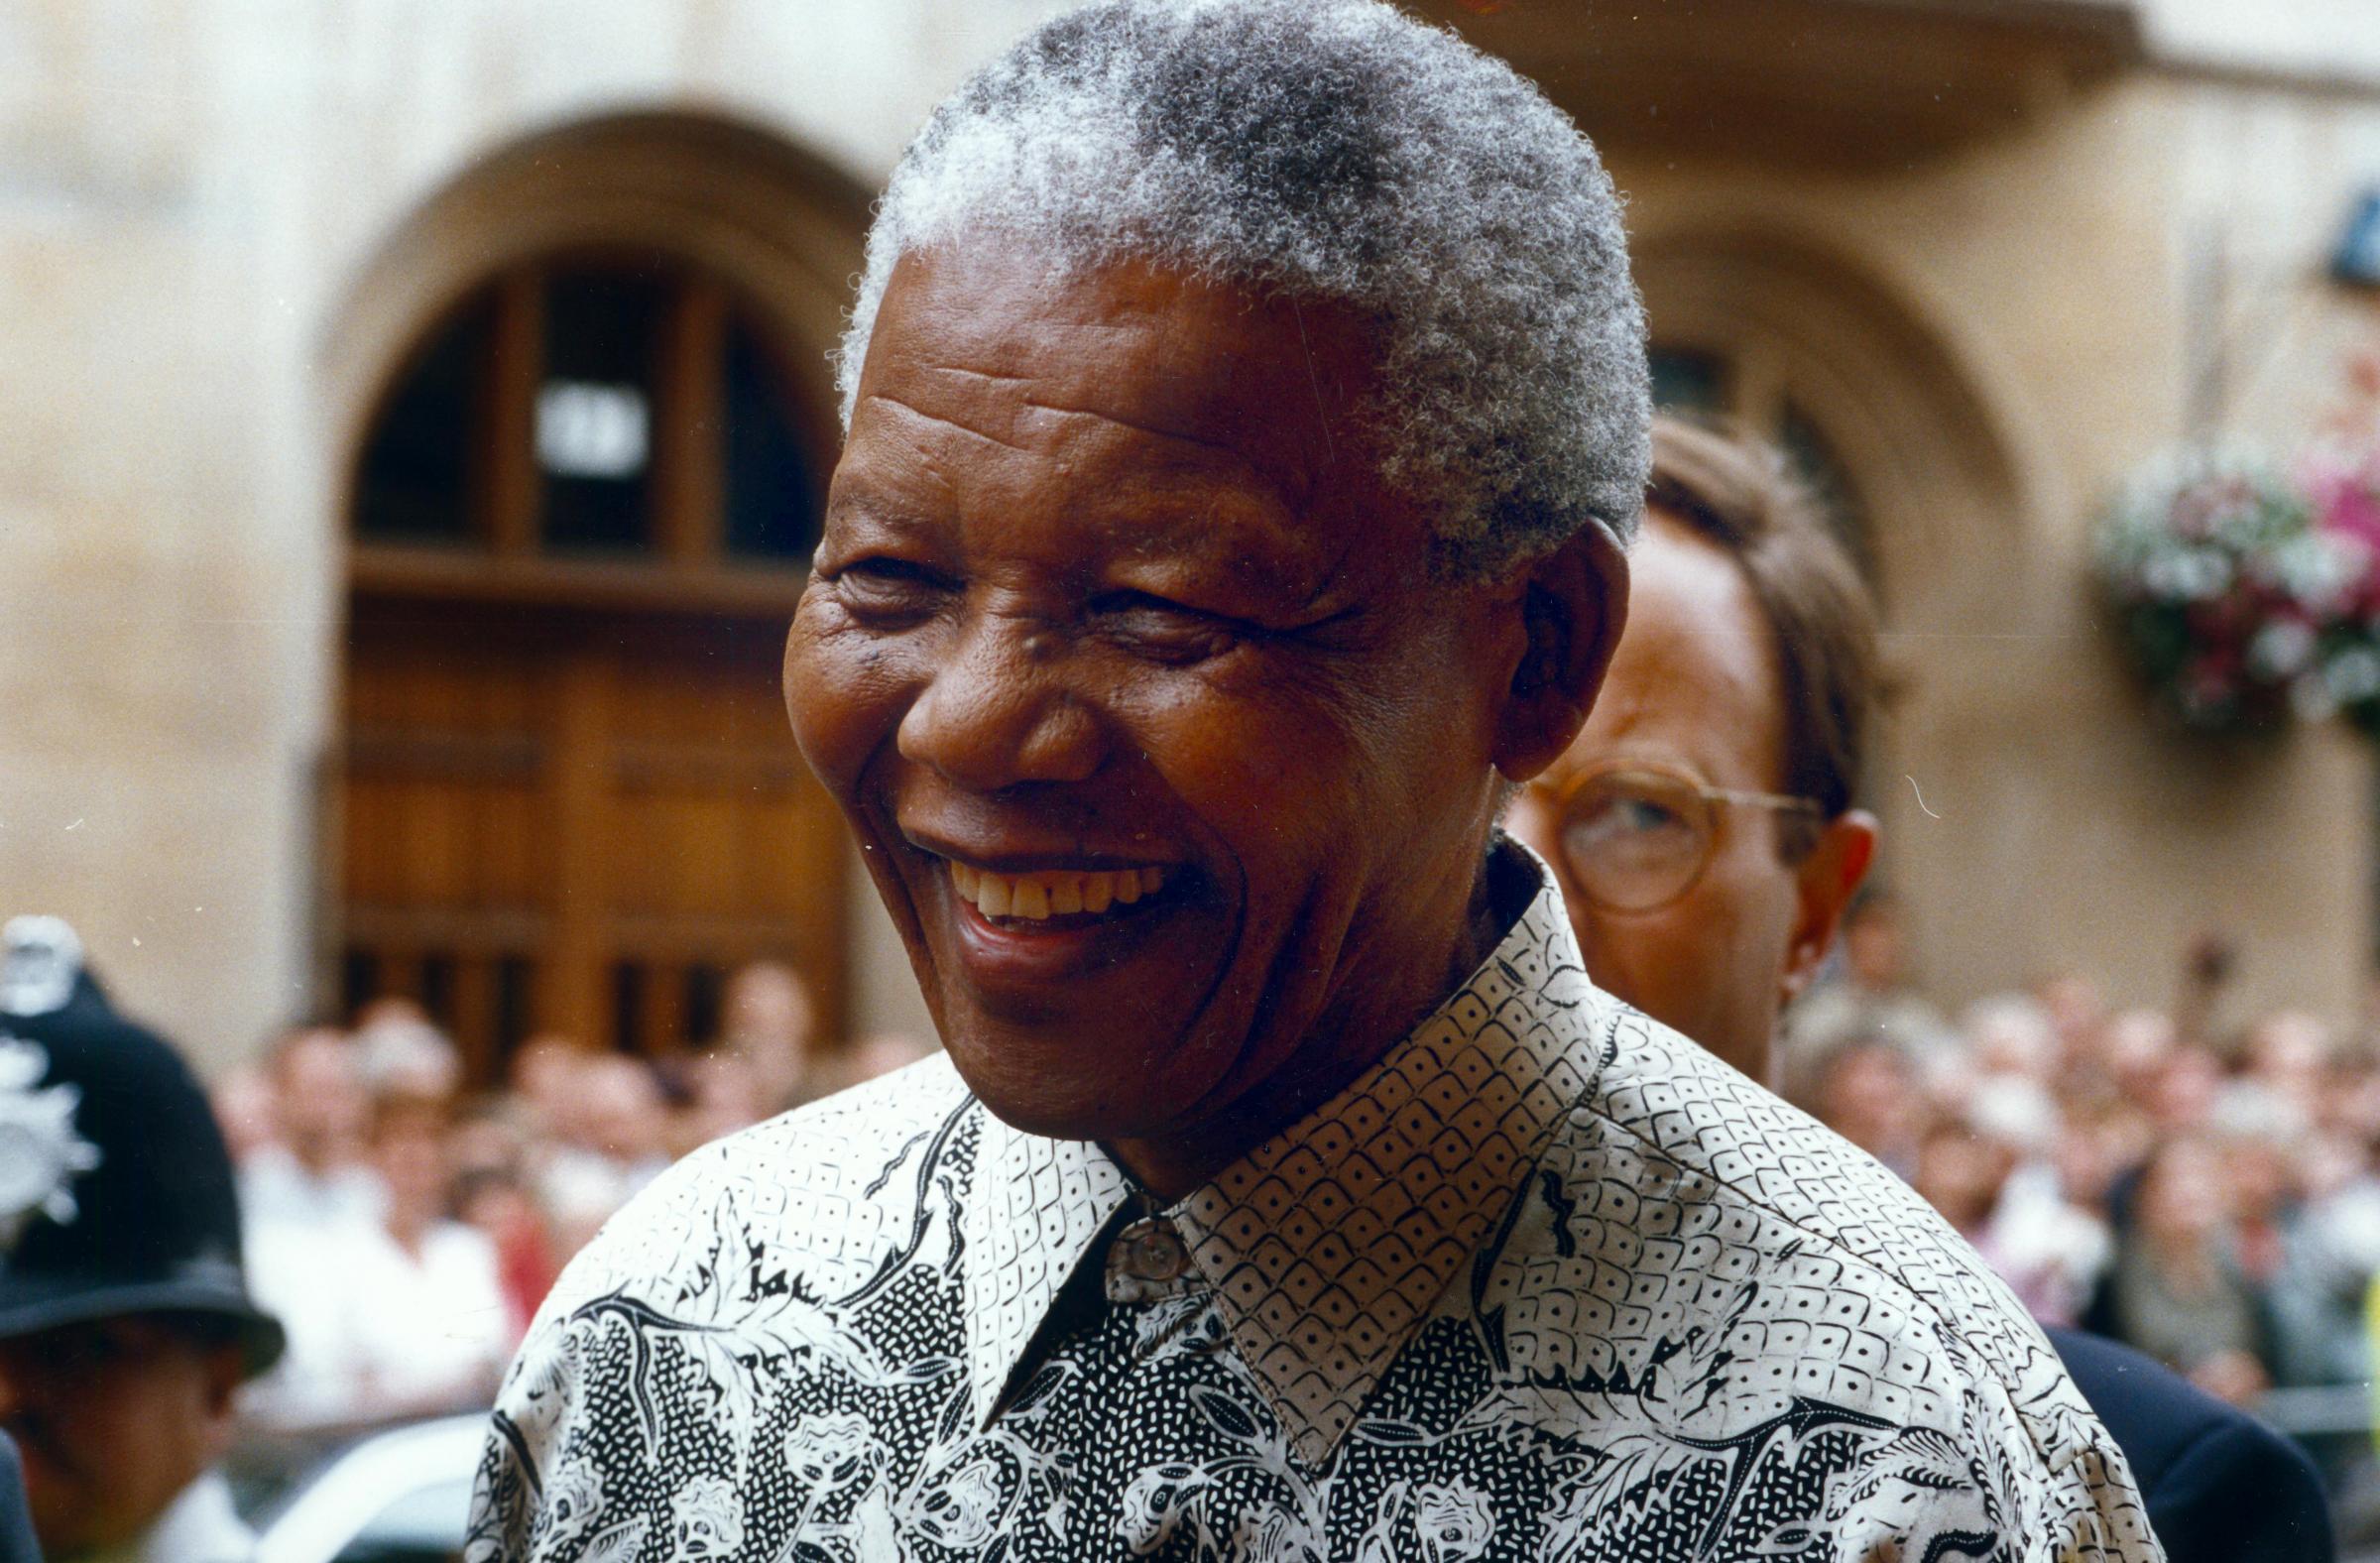 Nelson Mandela was described as having a phenomenal presence